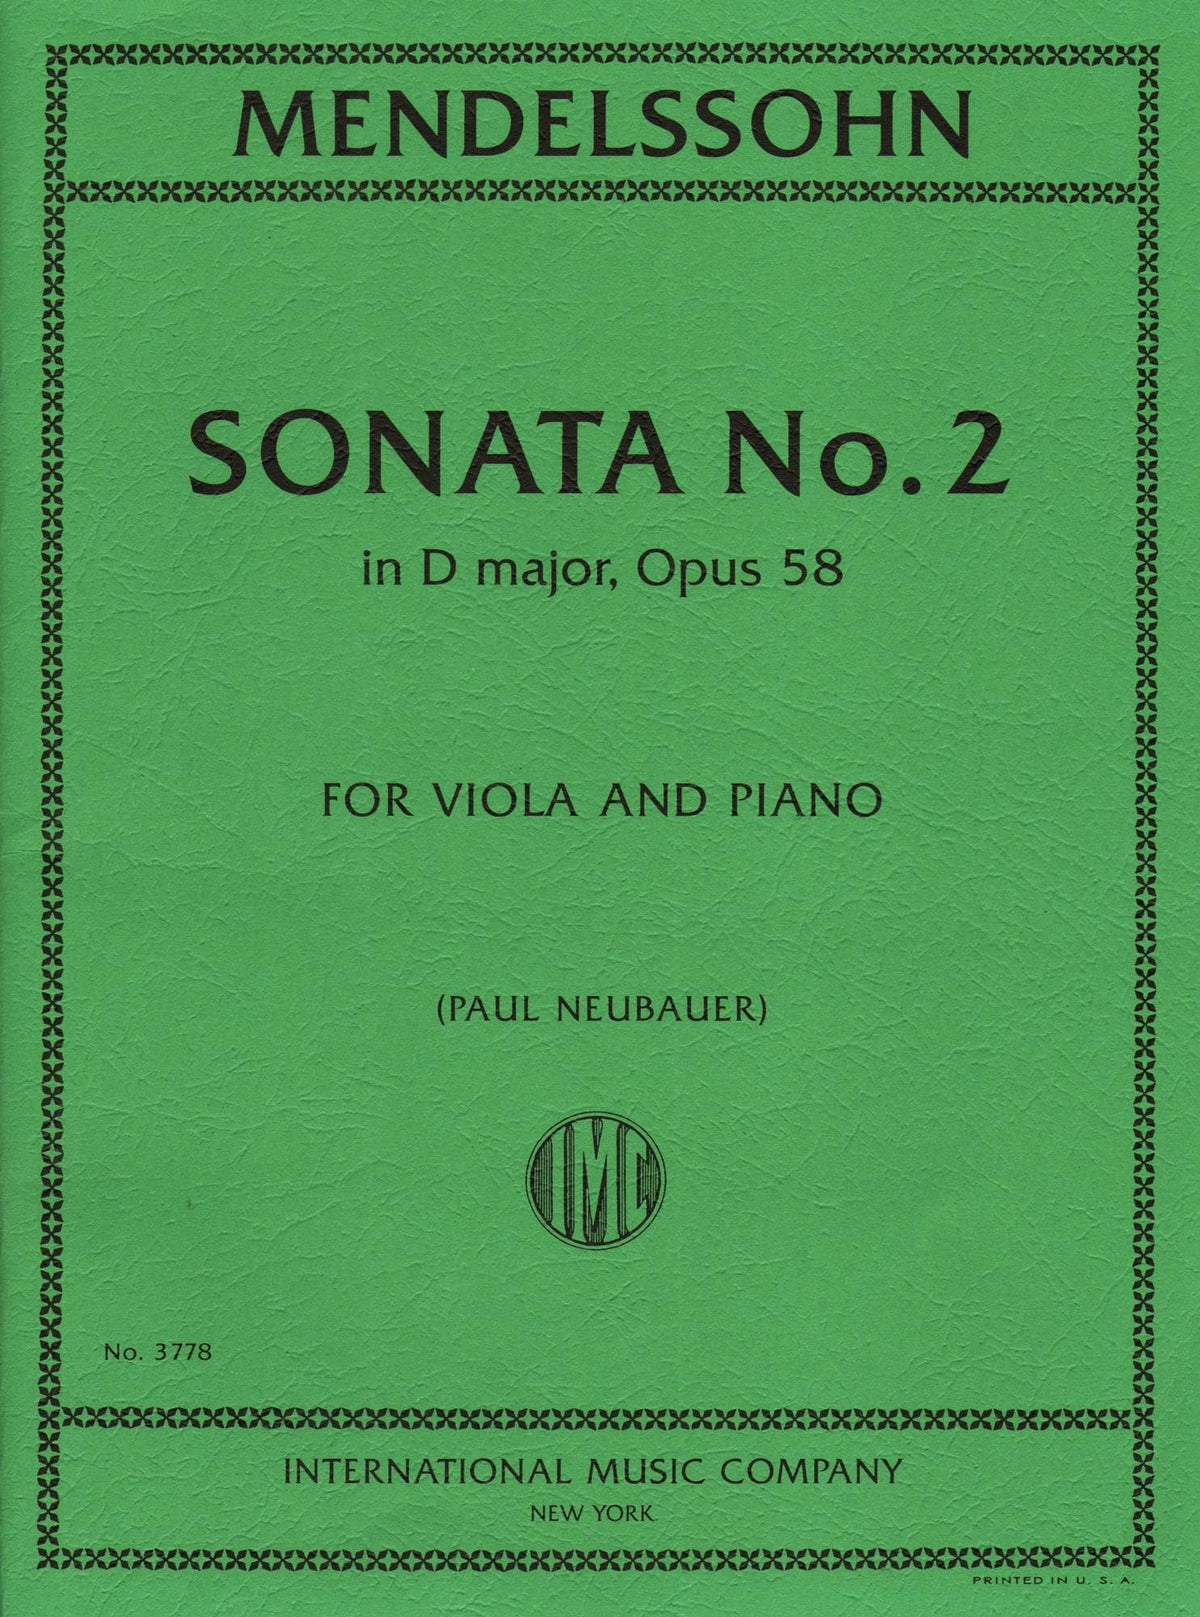 Mendelssohn, Felix - Sonata No. 2 in D major, Op 58 - Viola and Piano - edited by Paul Neubauer - International